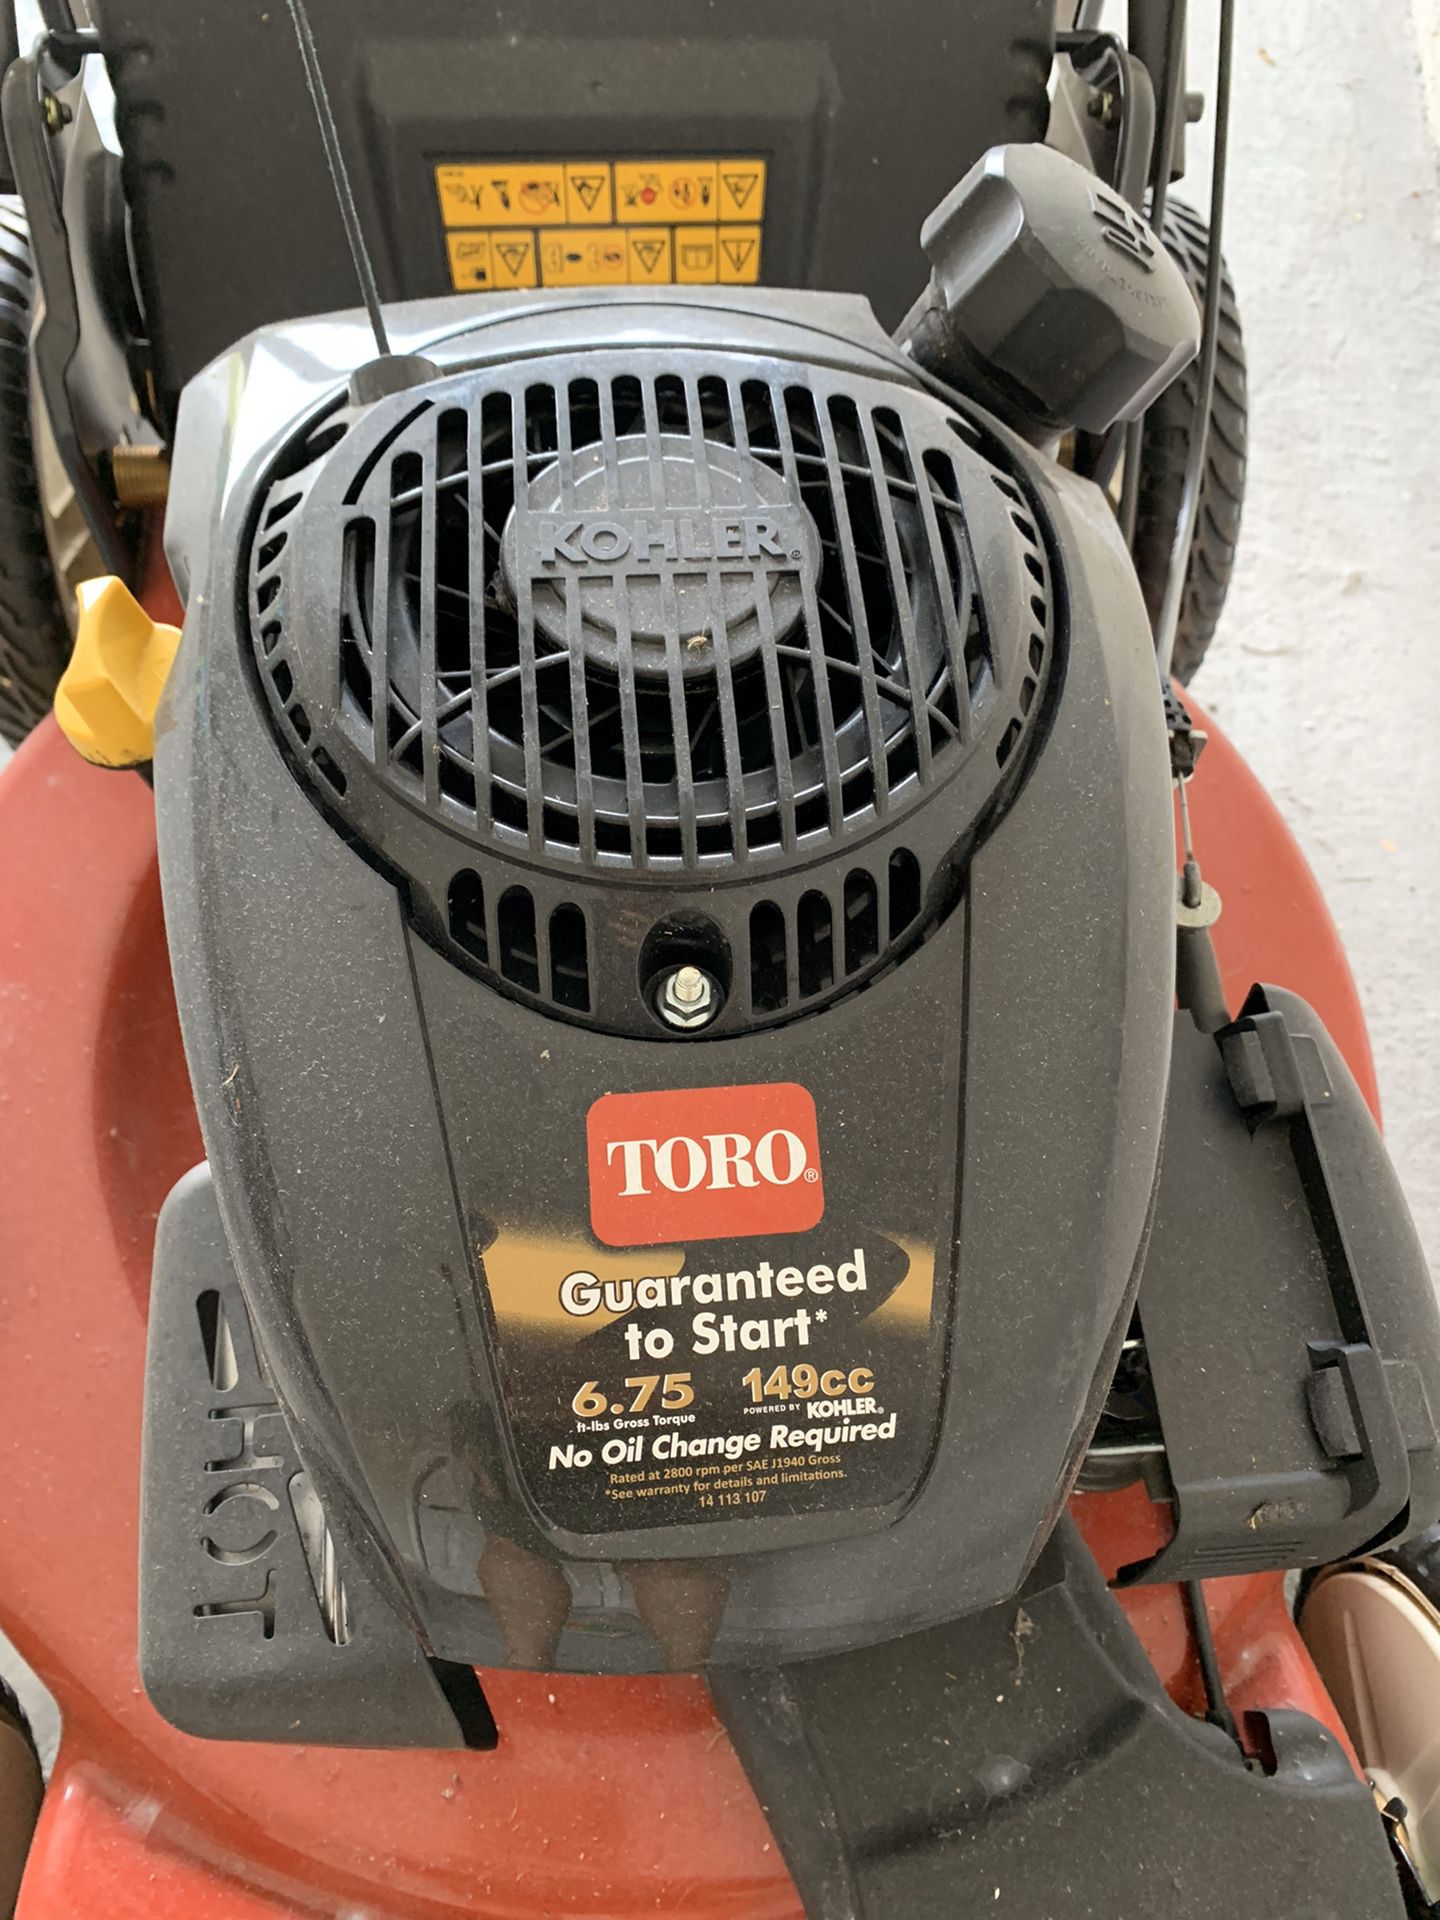 Toro recycler variable speed high wheel. Lawn mower